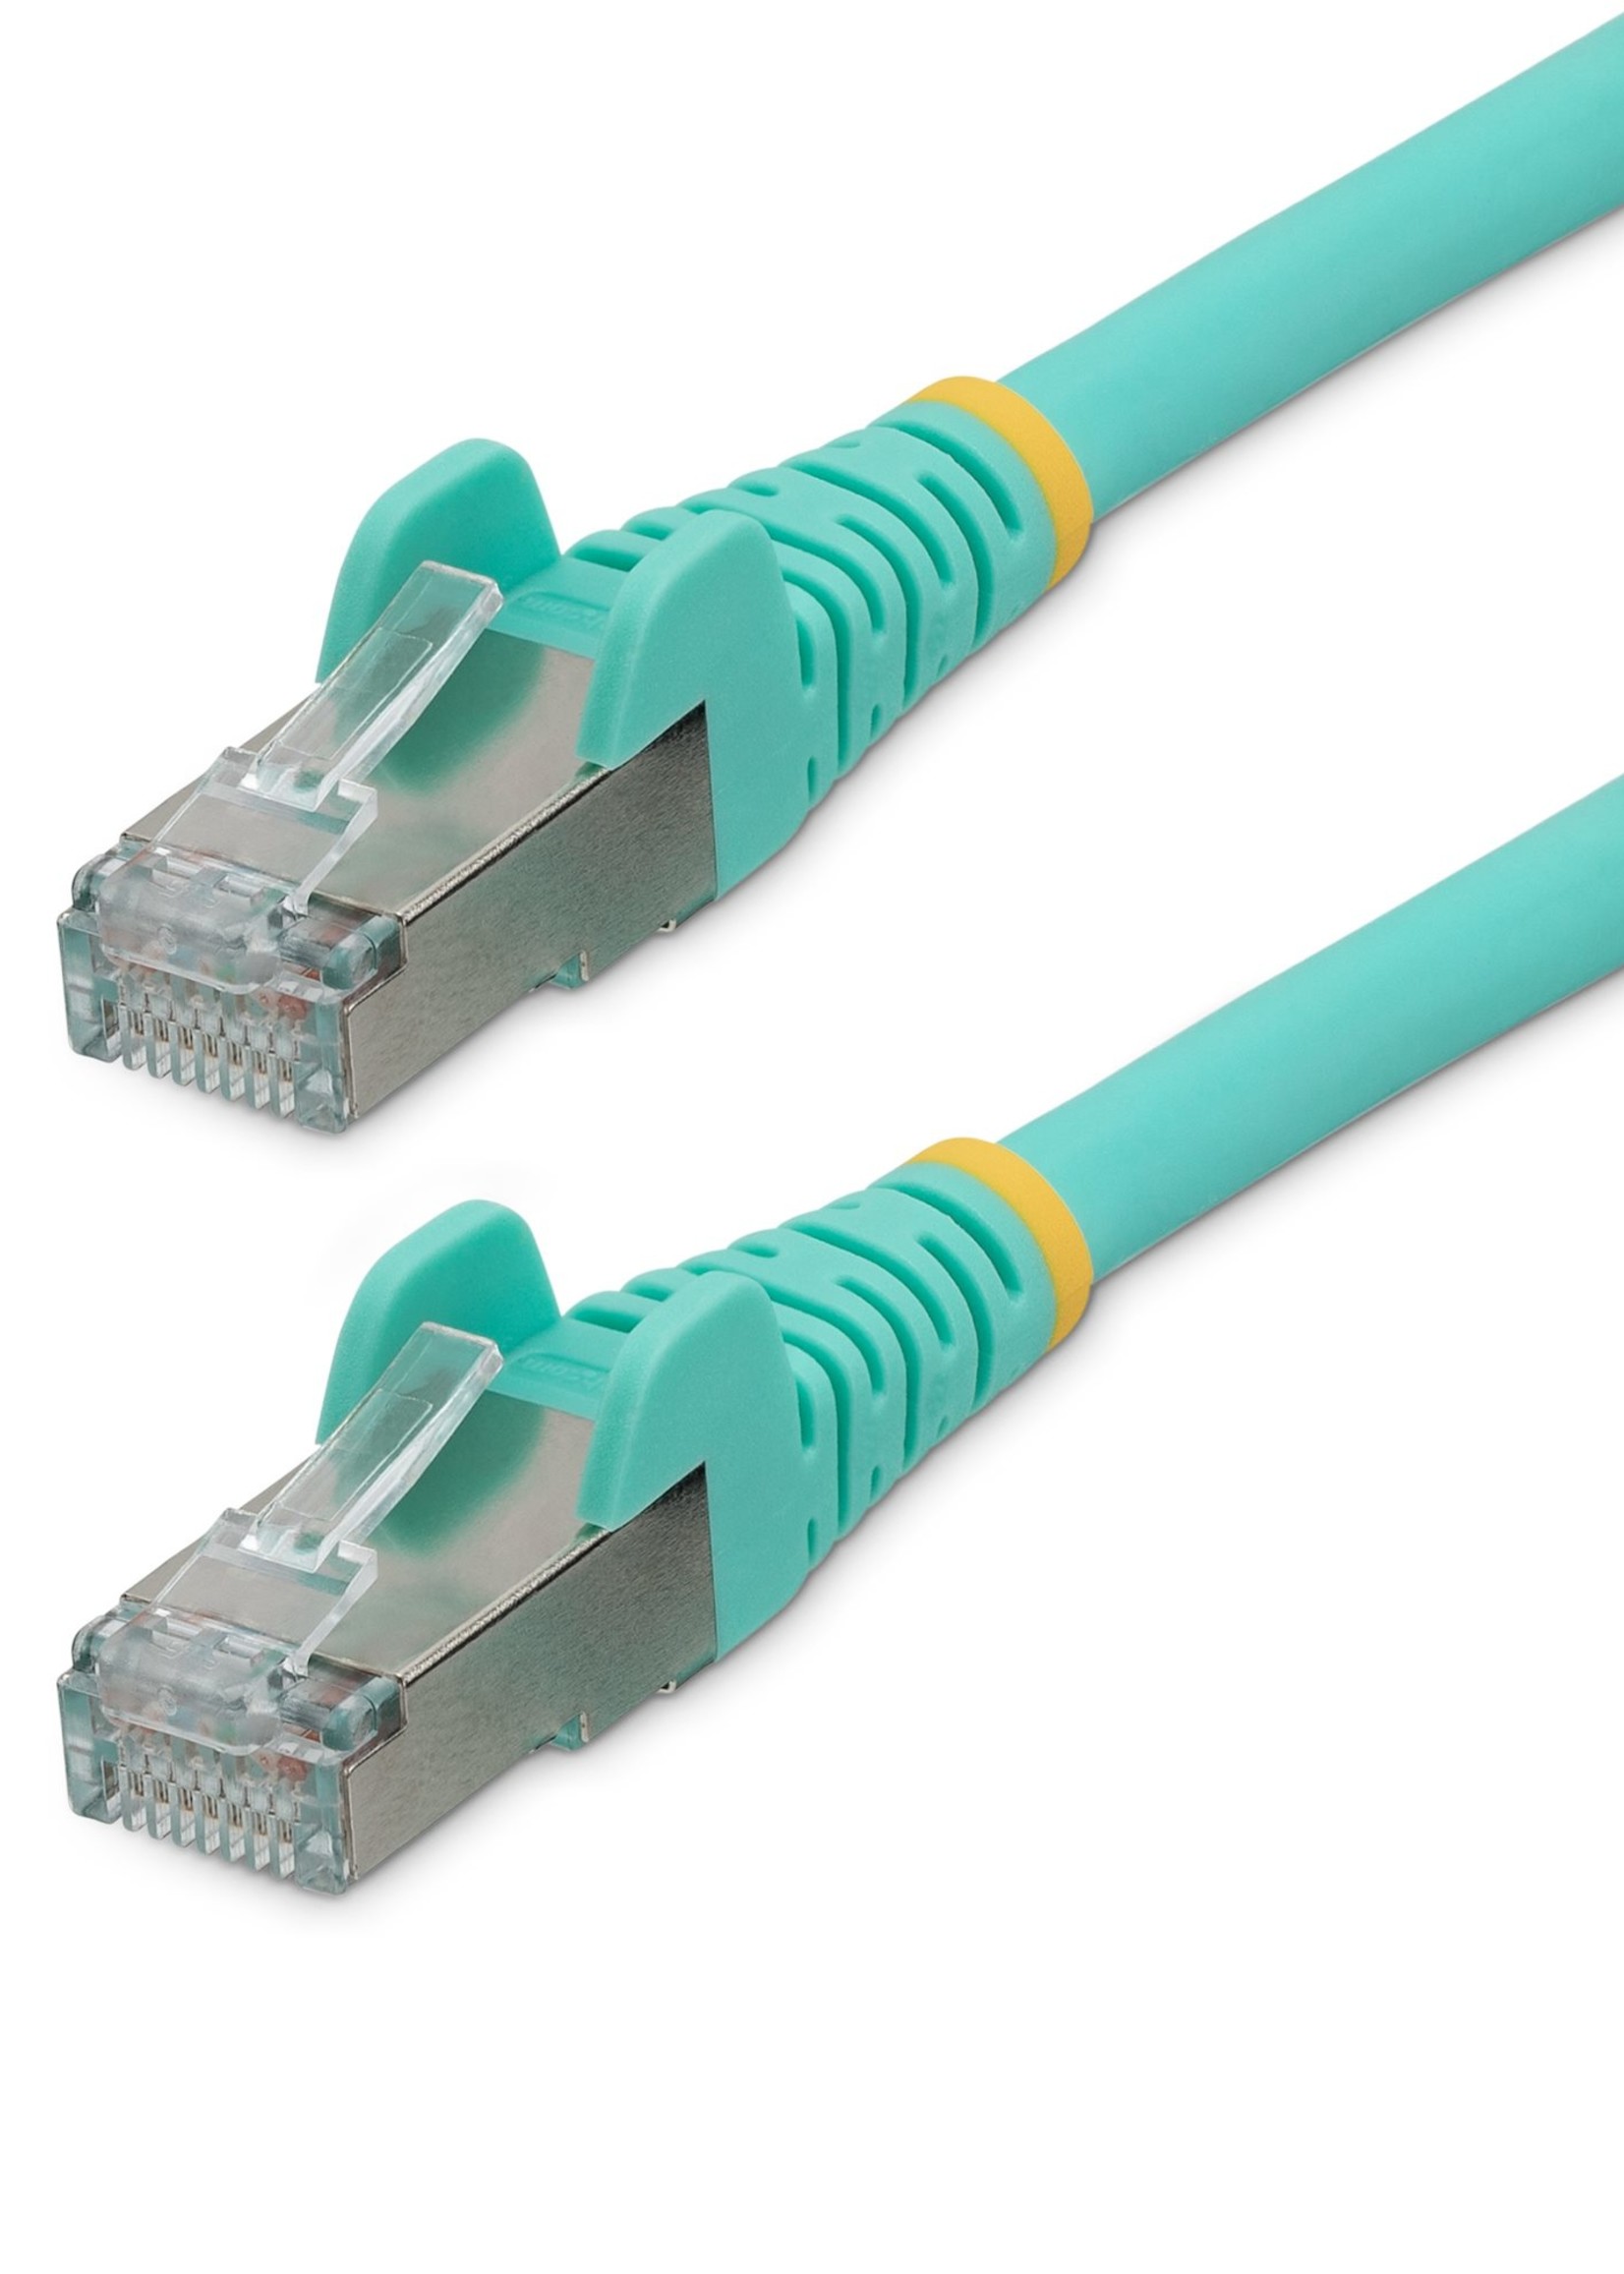 10m LSZH CAT6a Ethernet Cable - Aqua